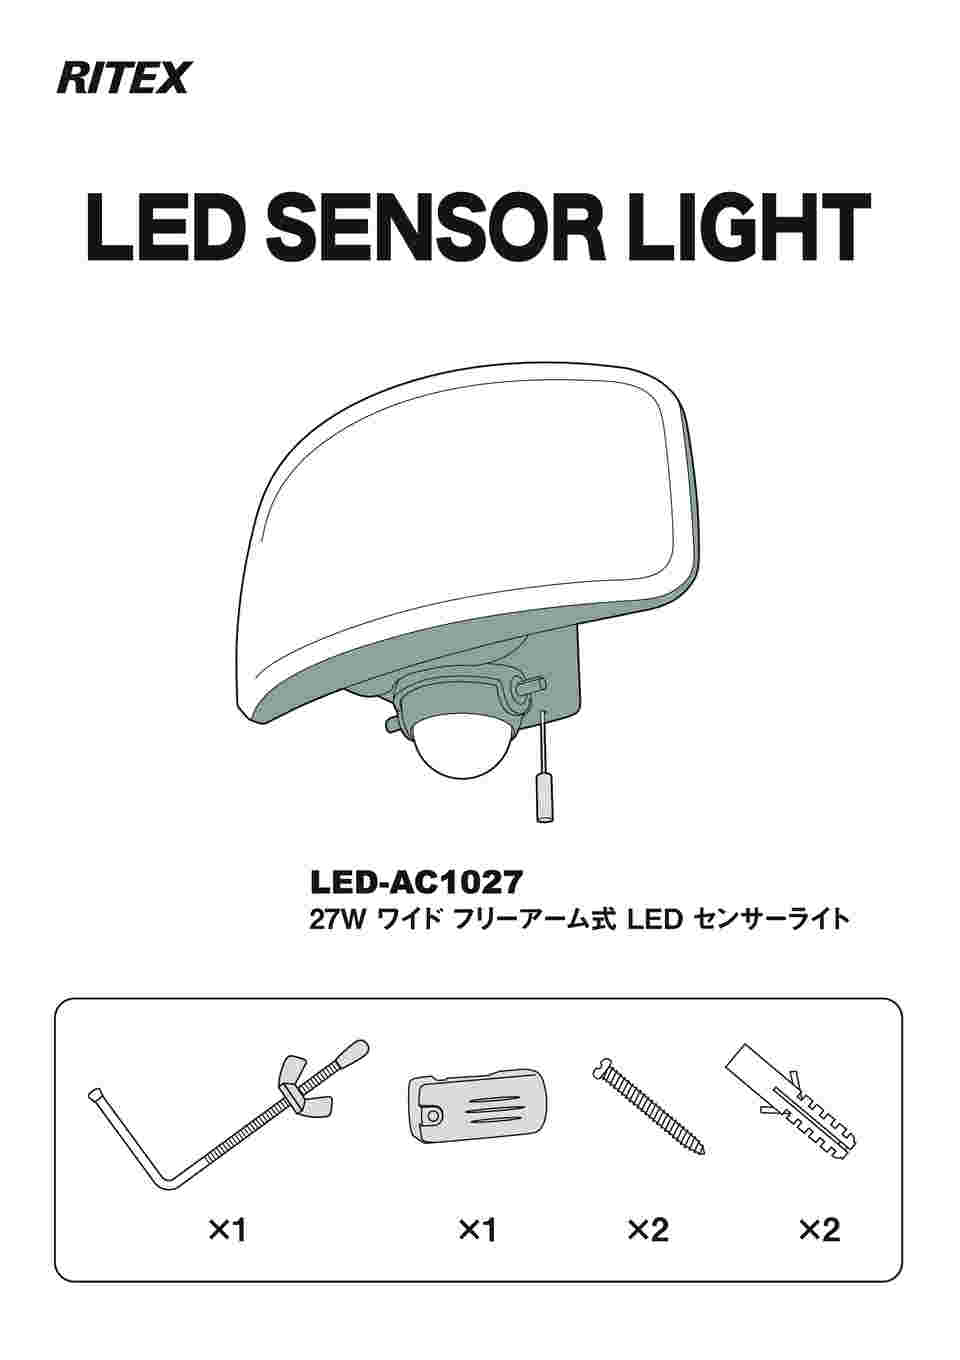 64-8965-69 27Wワイド フリーアーム式 LEDセンサーライト LED-AC1027